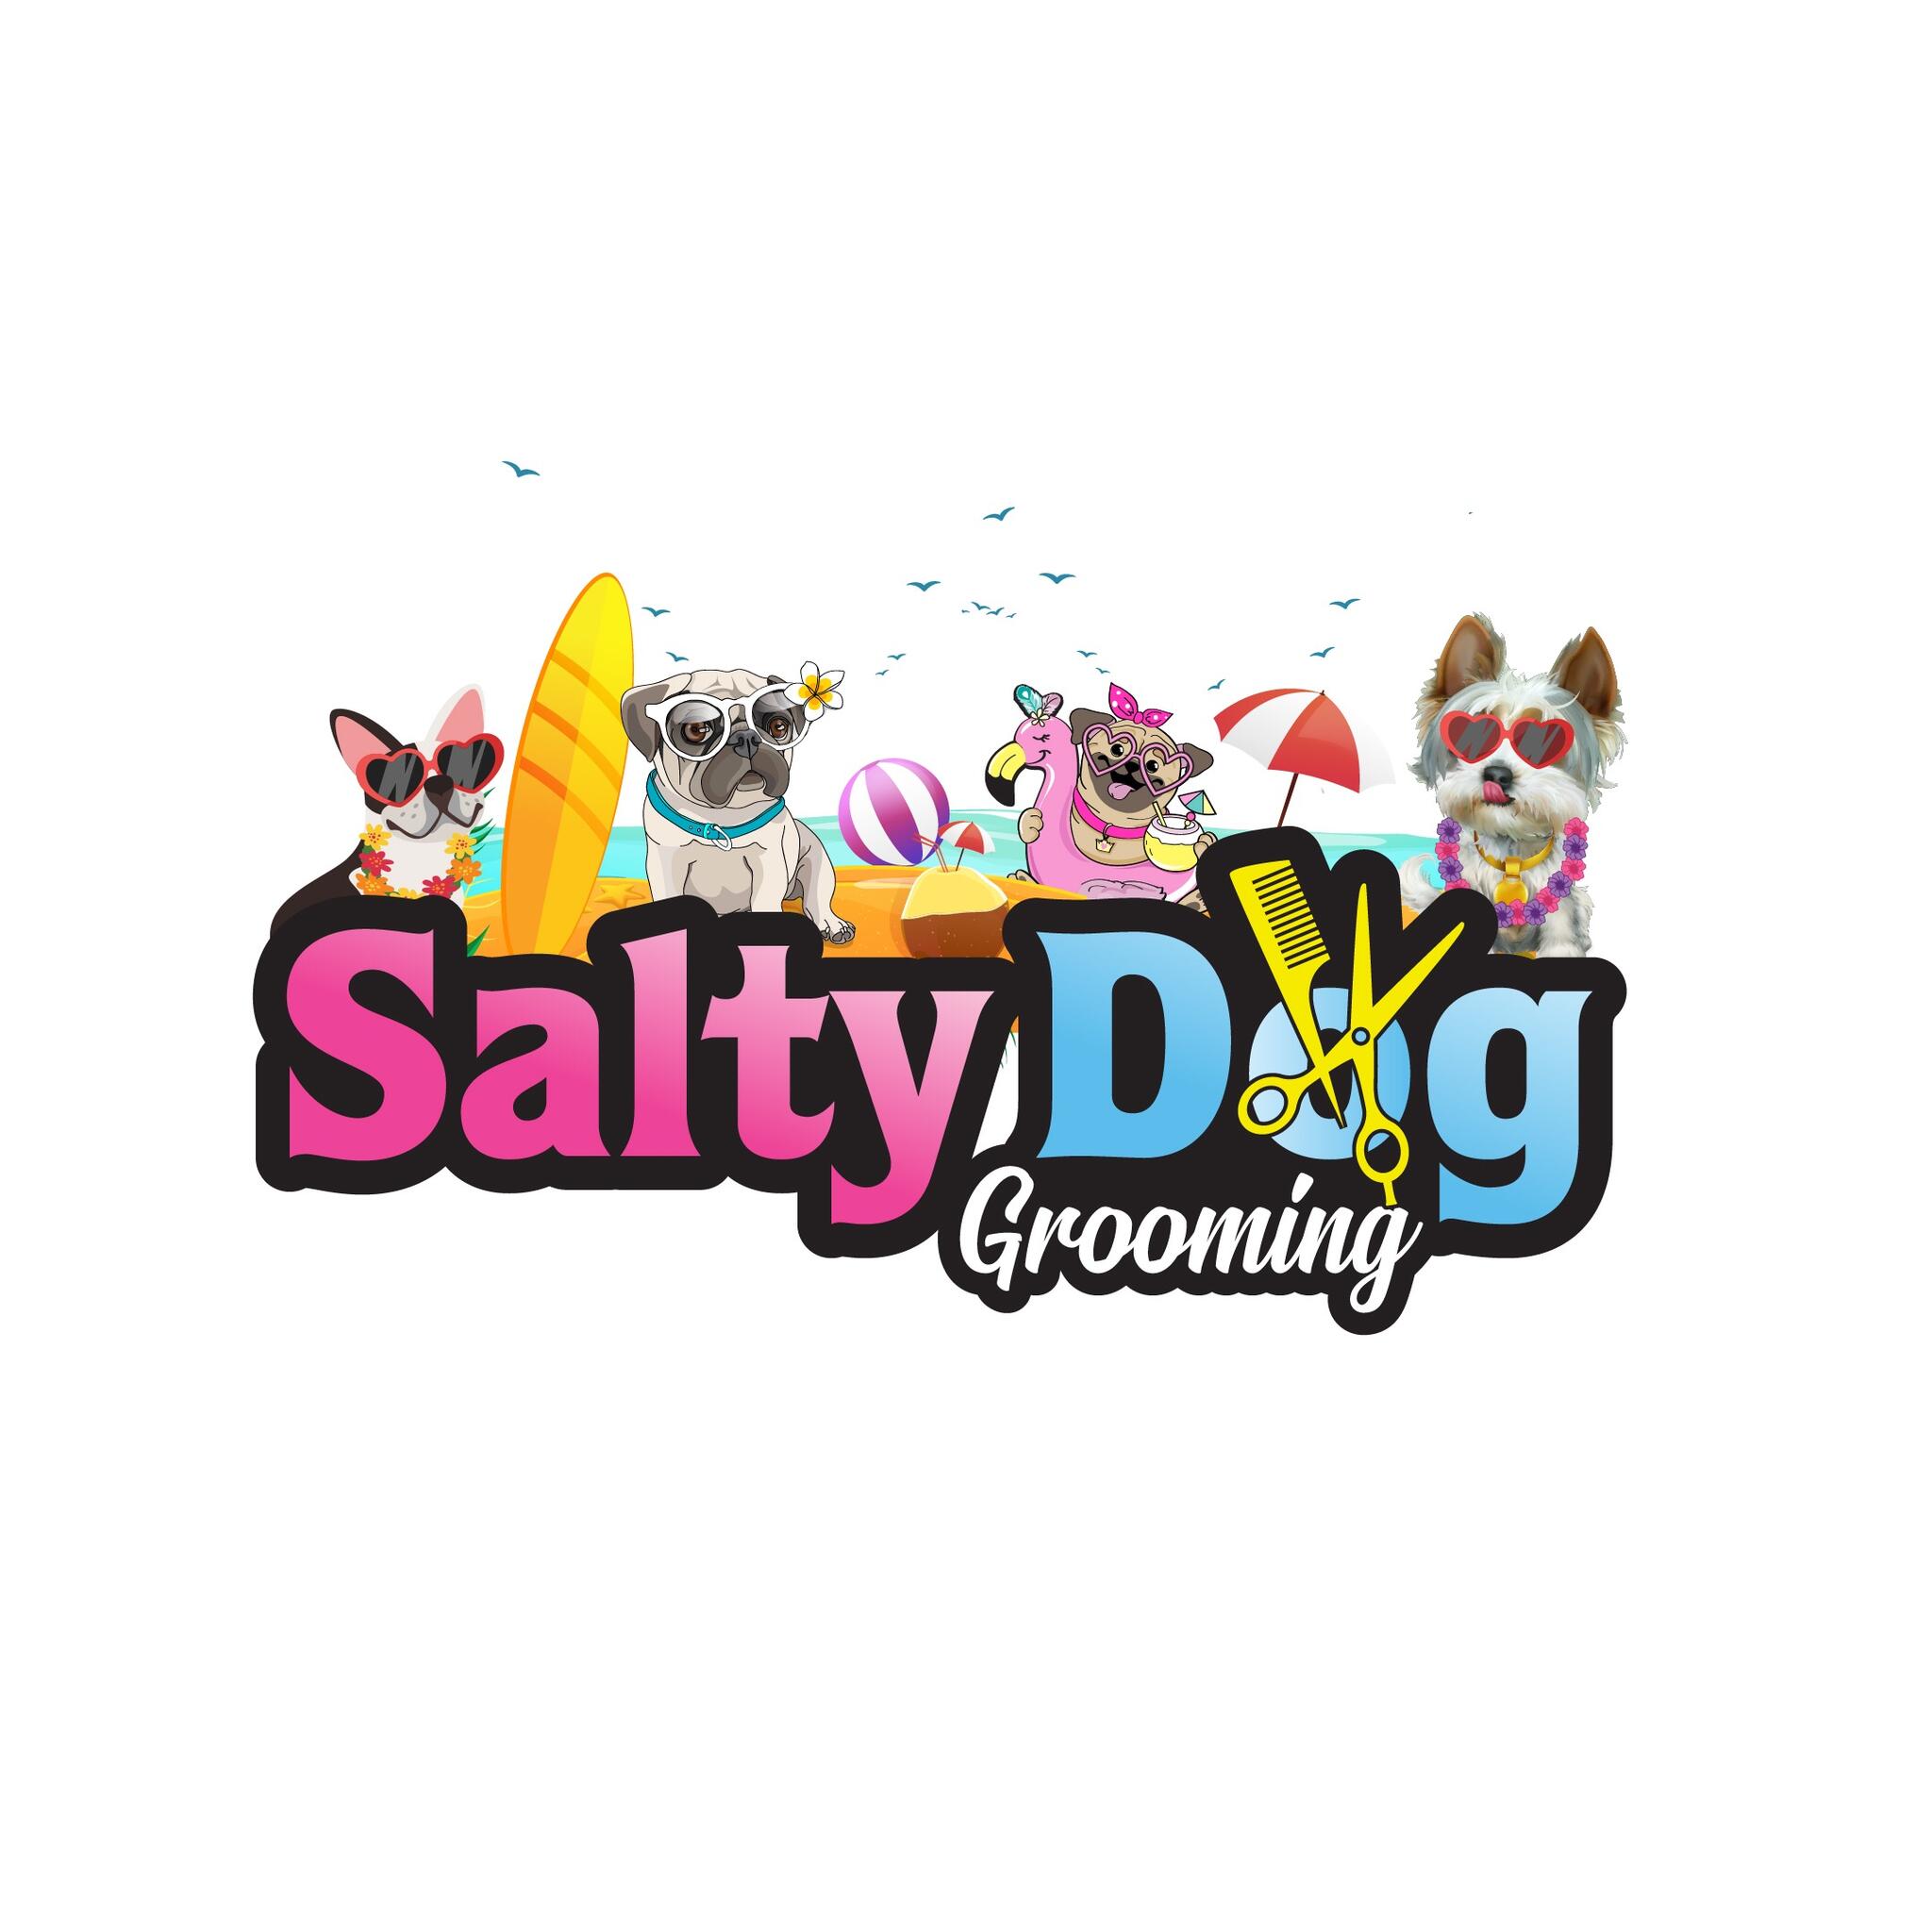 Salty Dog Grooming Salon Interior